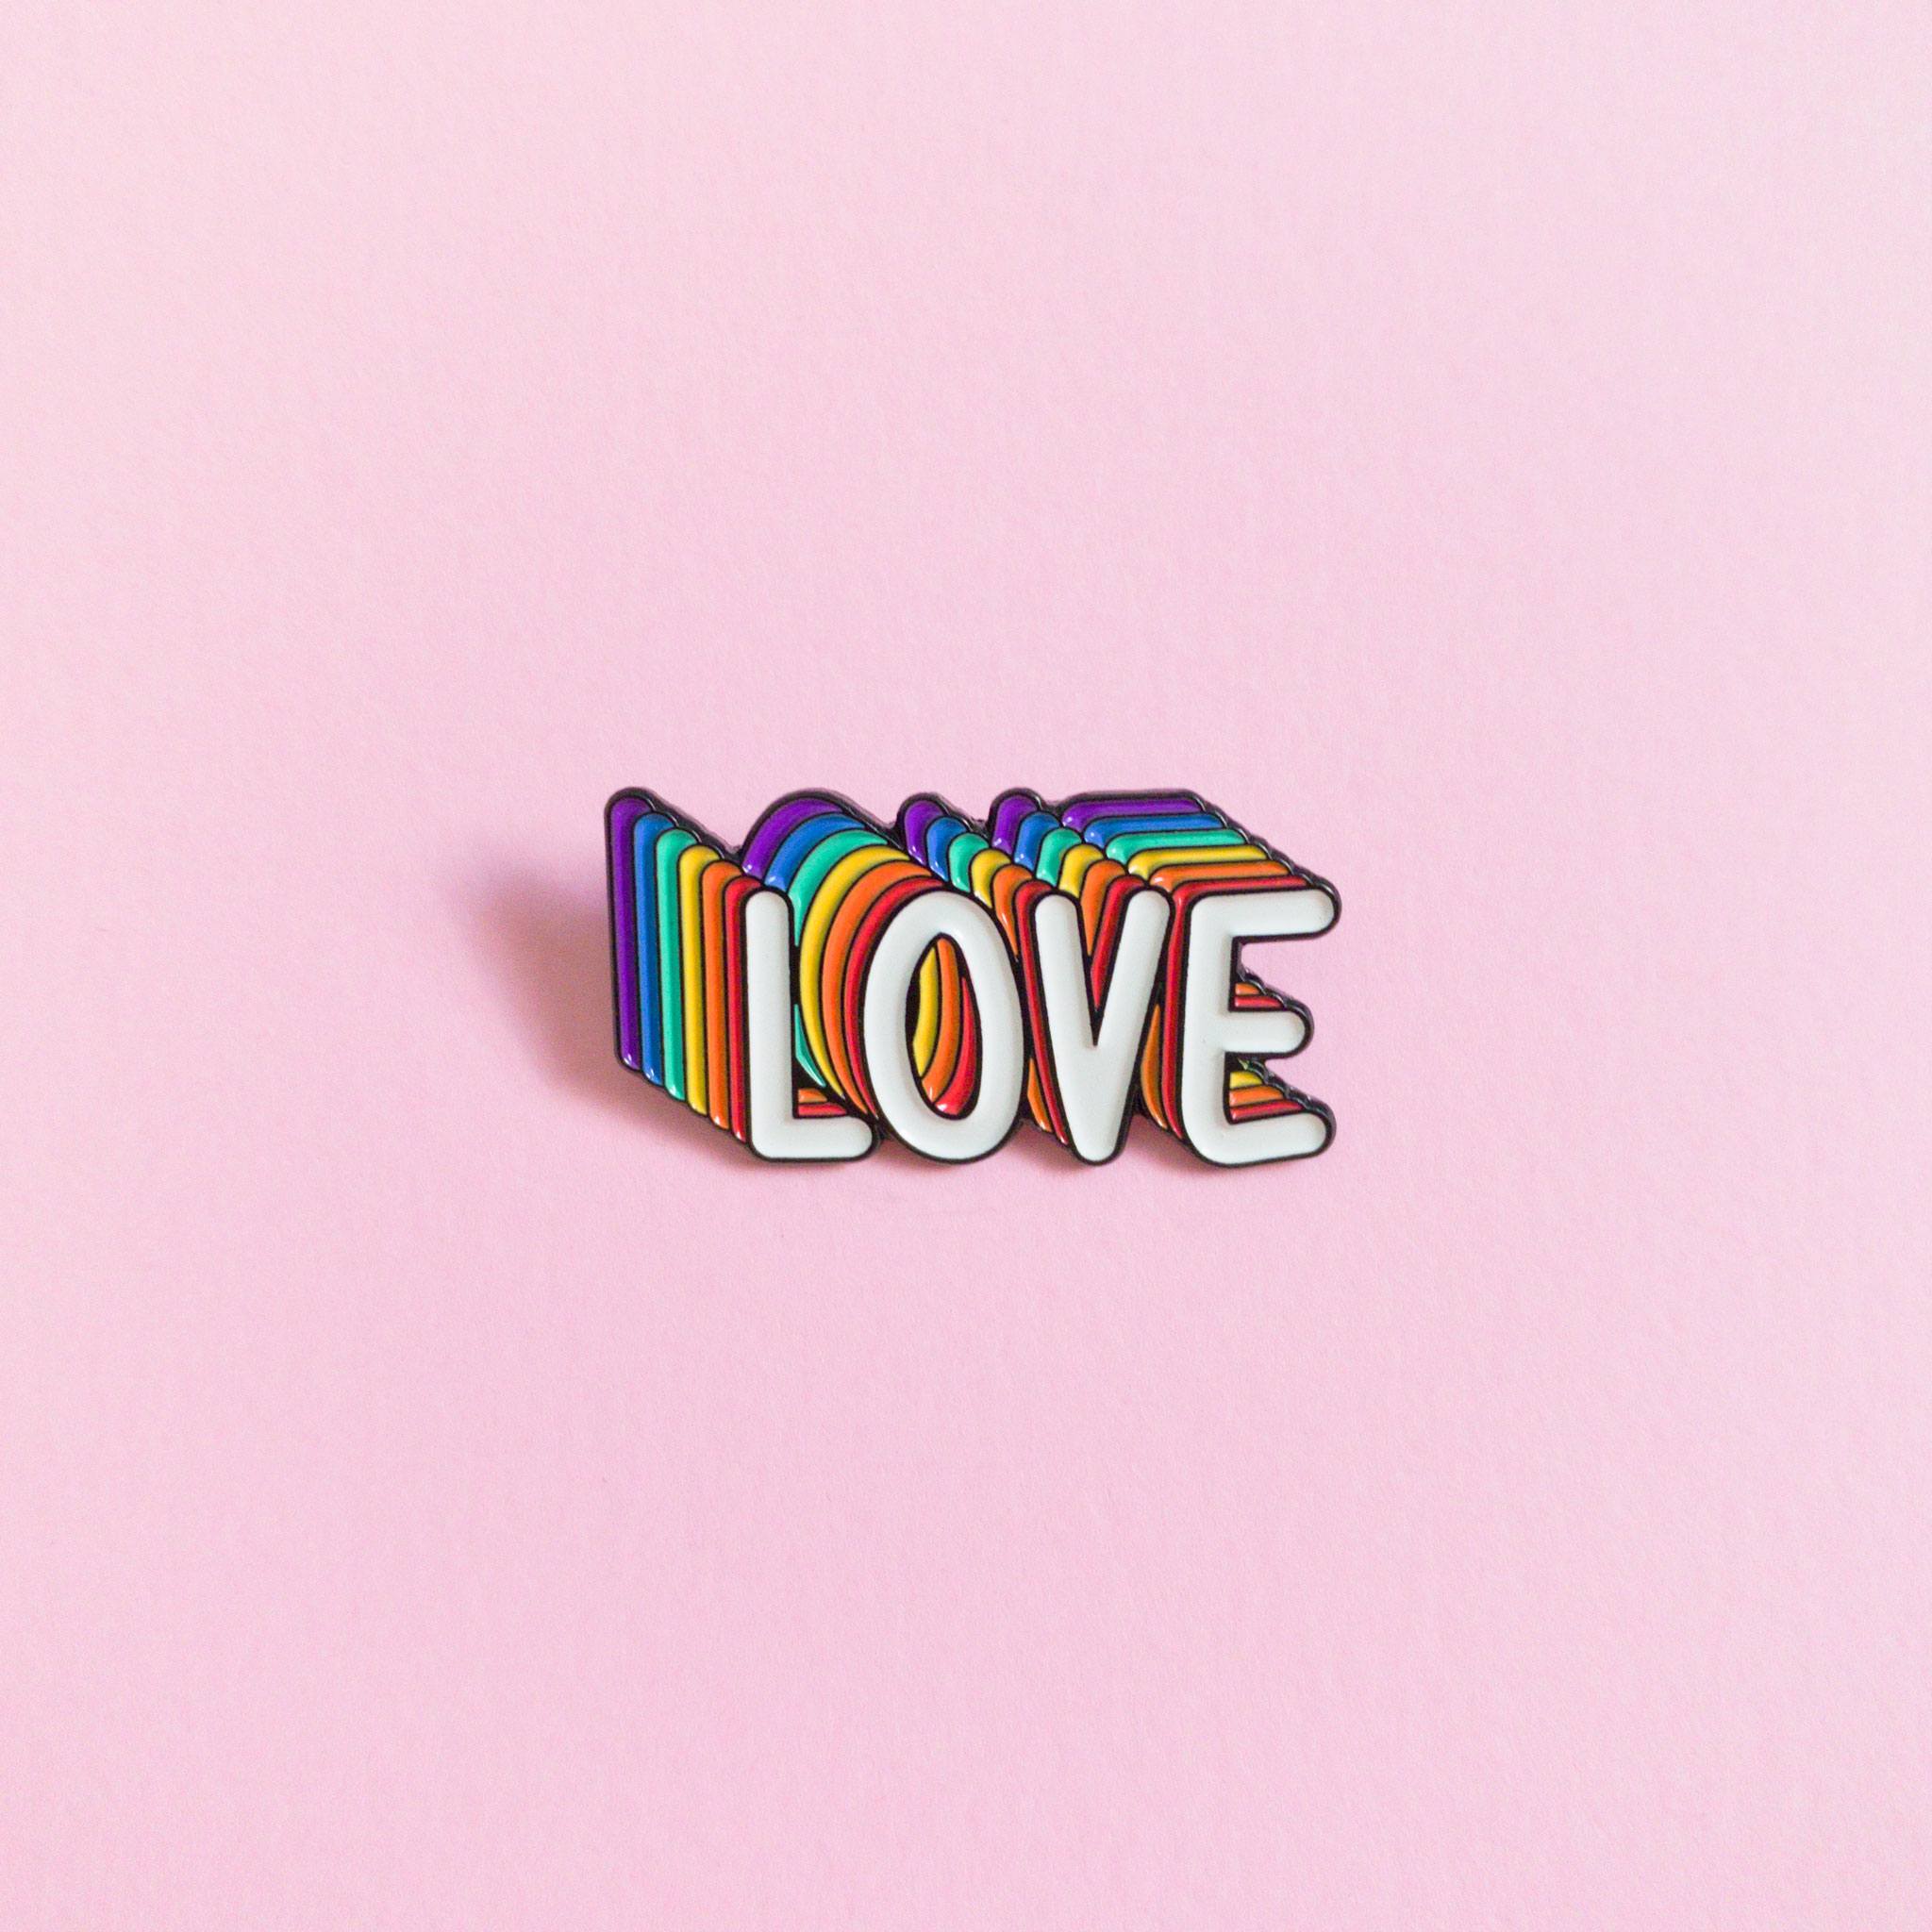 Pin on Love